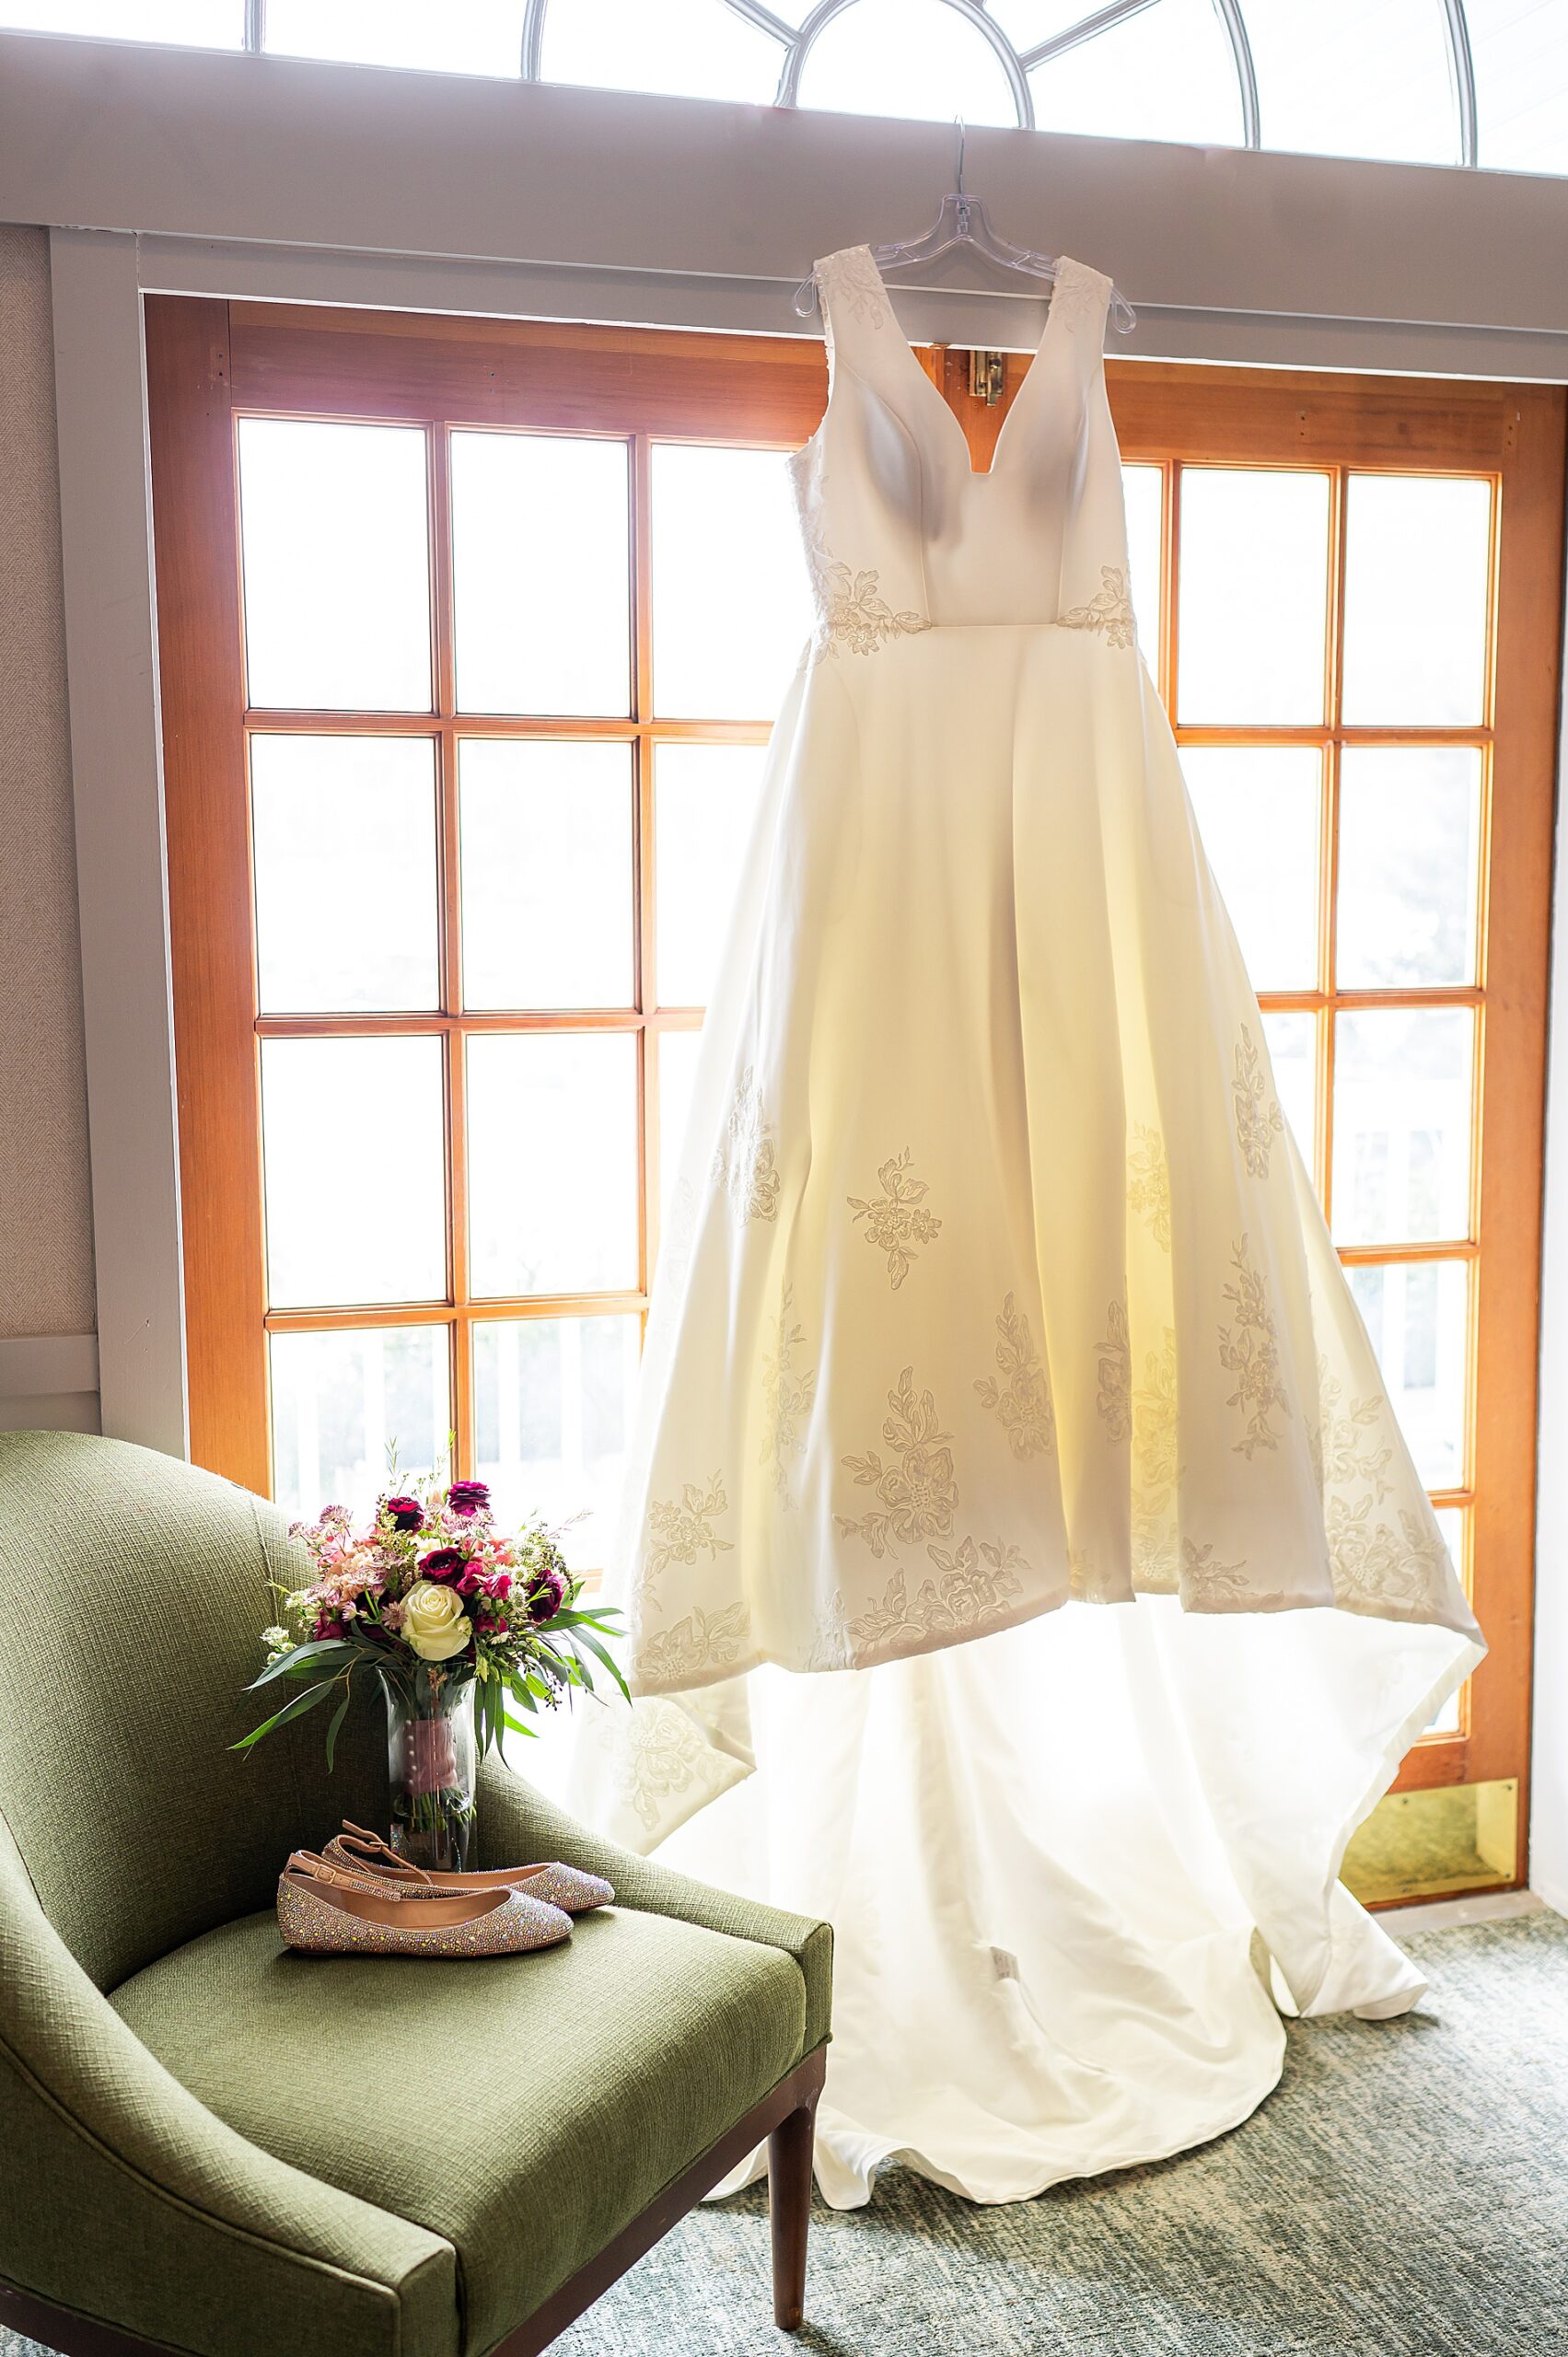 Wedding gown hang in the window